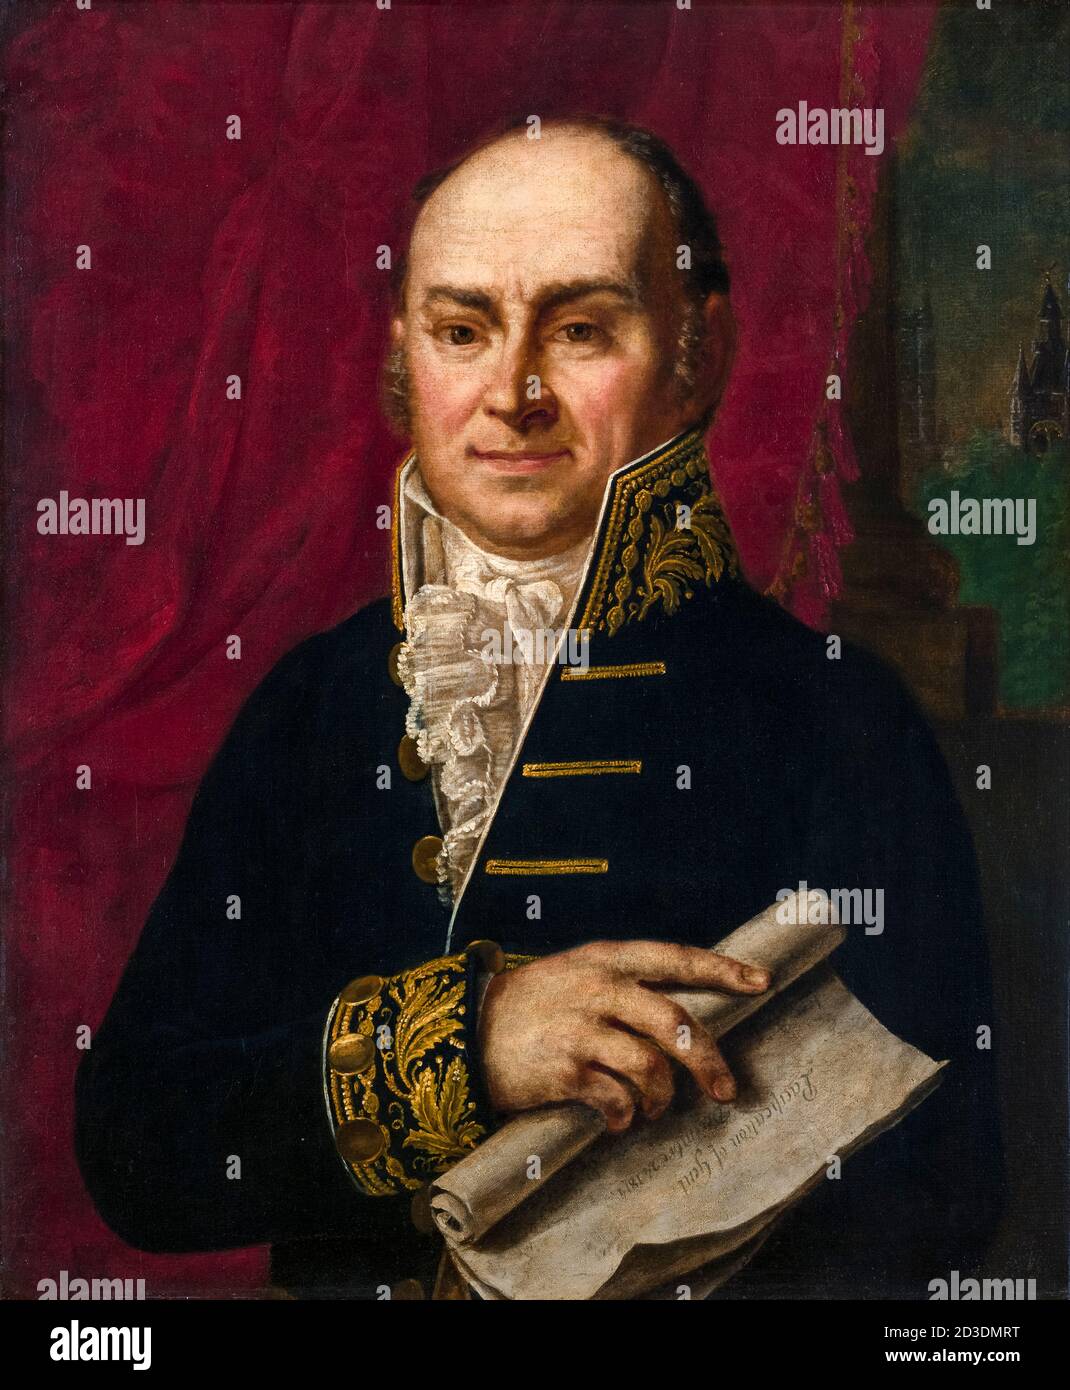 John Quincy Adams (1767-1848), American statesman, Sixth President of the United States, portrait painting by Pieter Van Huffel, 1815 Stock Photo